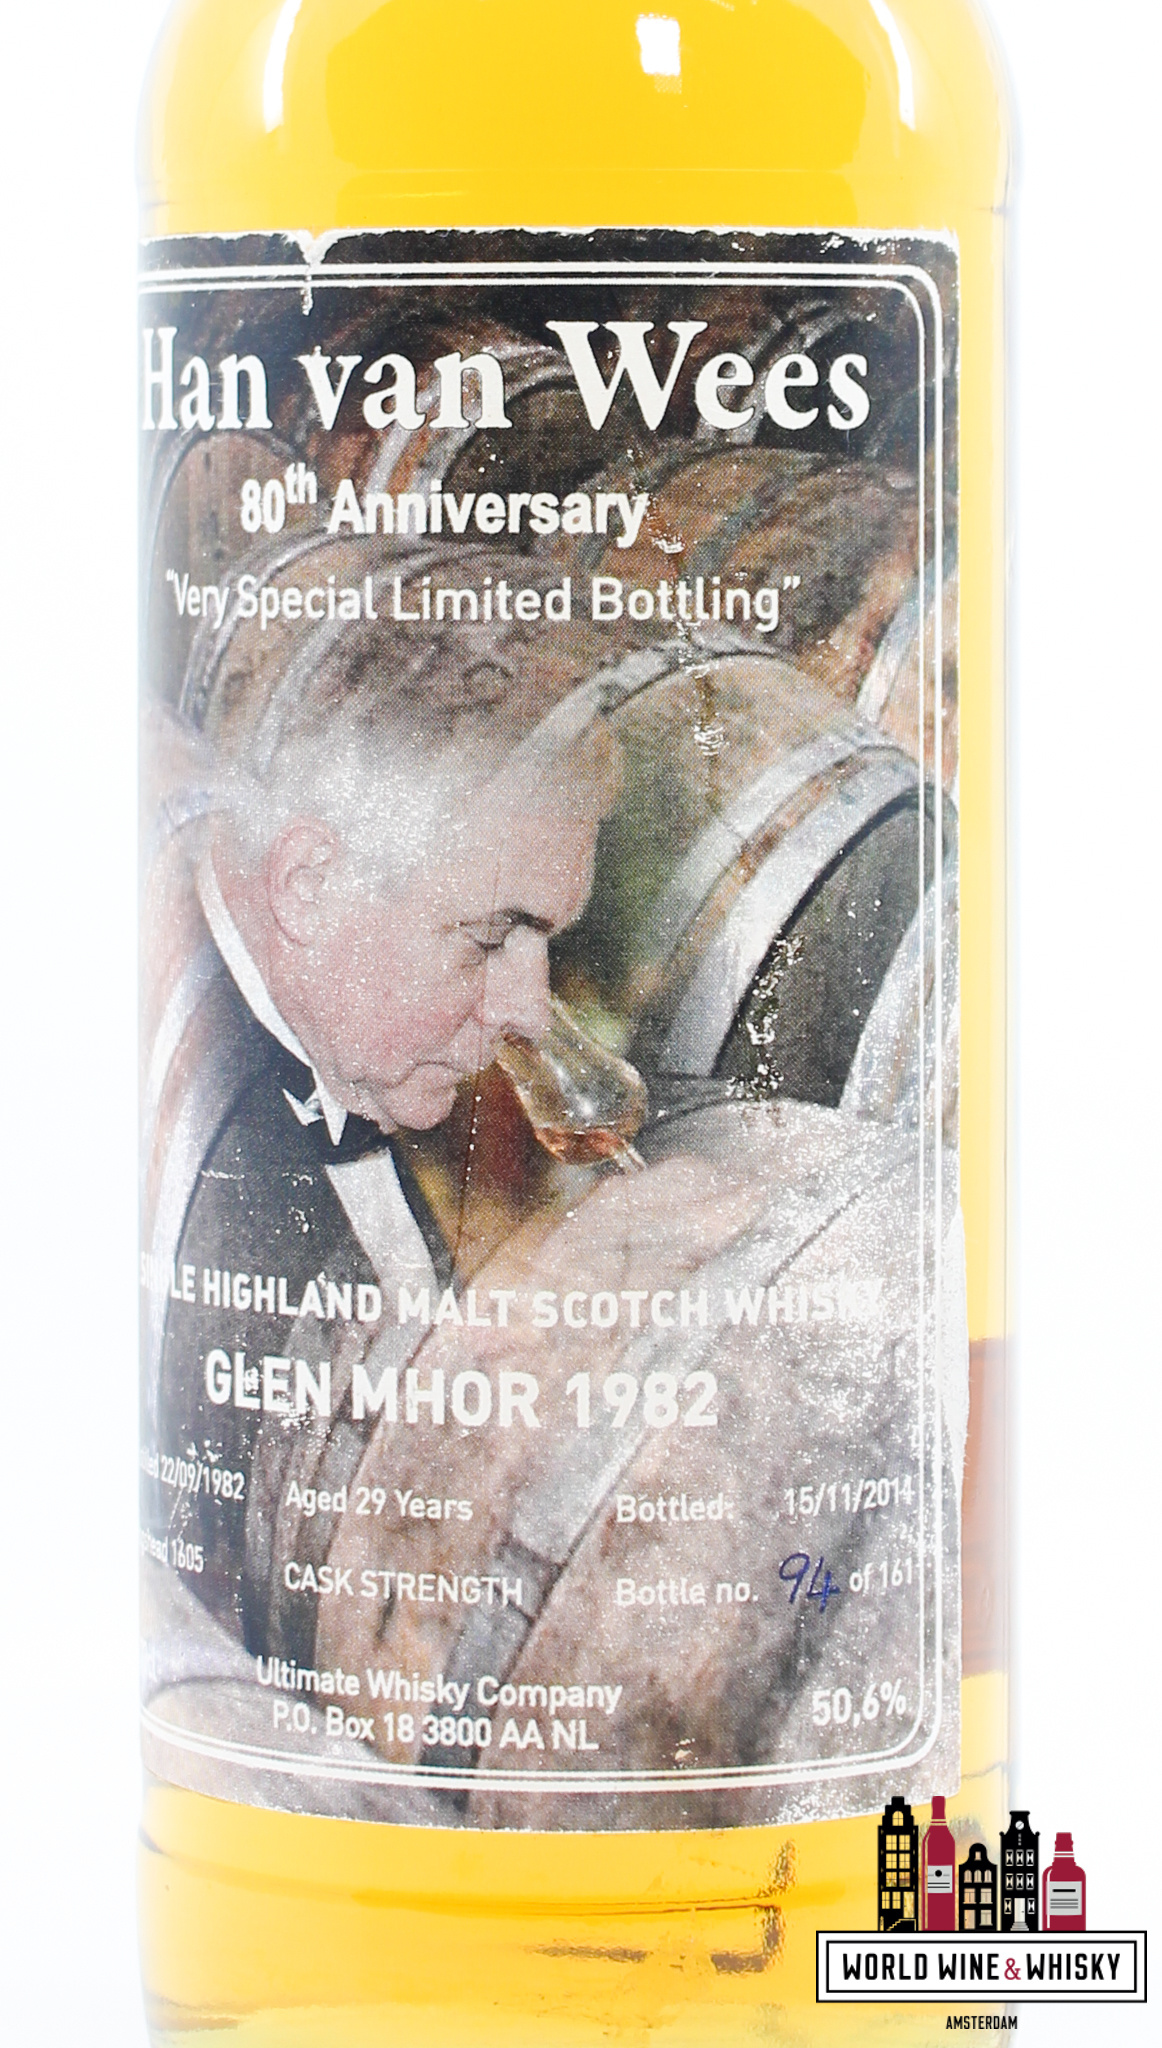 Glen Mhor Glen Mhor 29 Years Old 1982 2011 - Han van Wees 80th Anniversary - Cask 1605 50.6% (1 of 161)